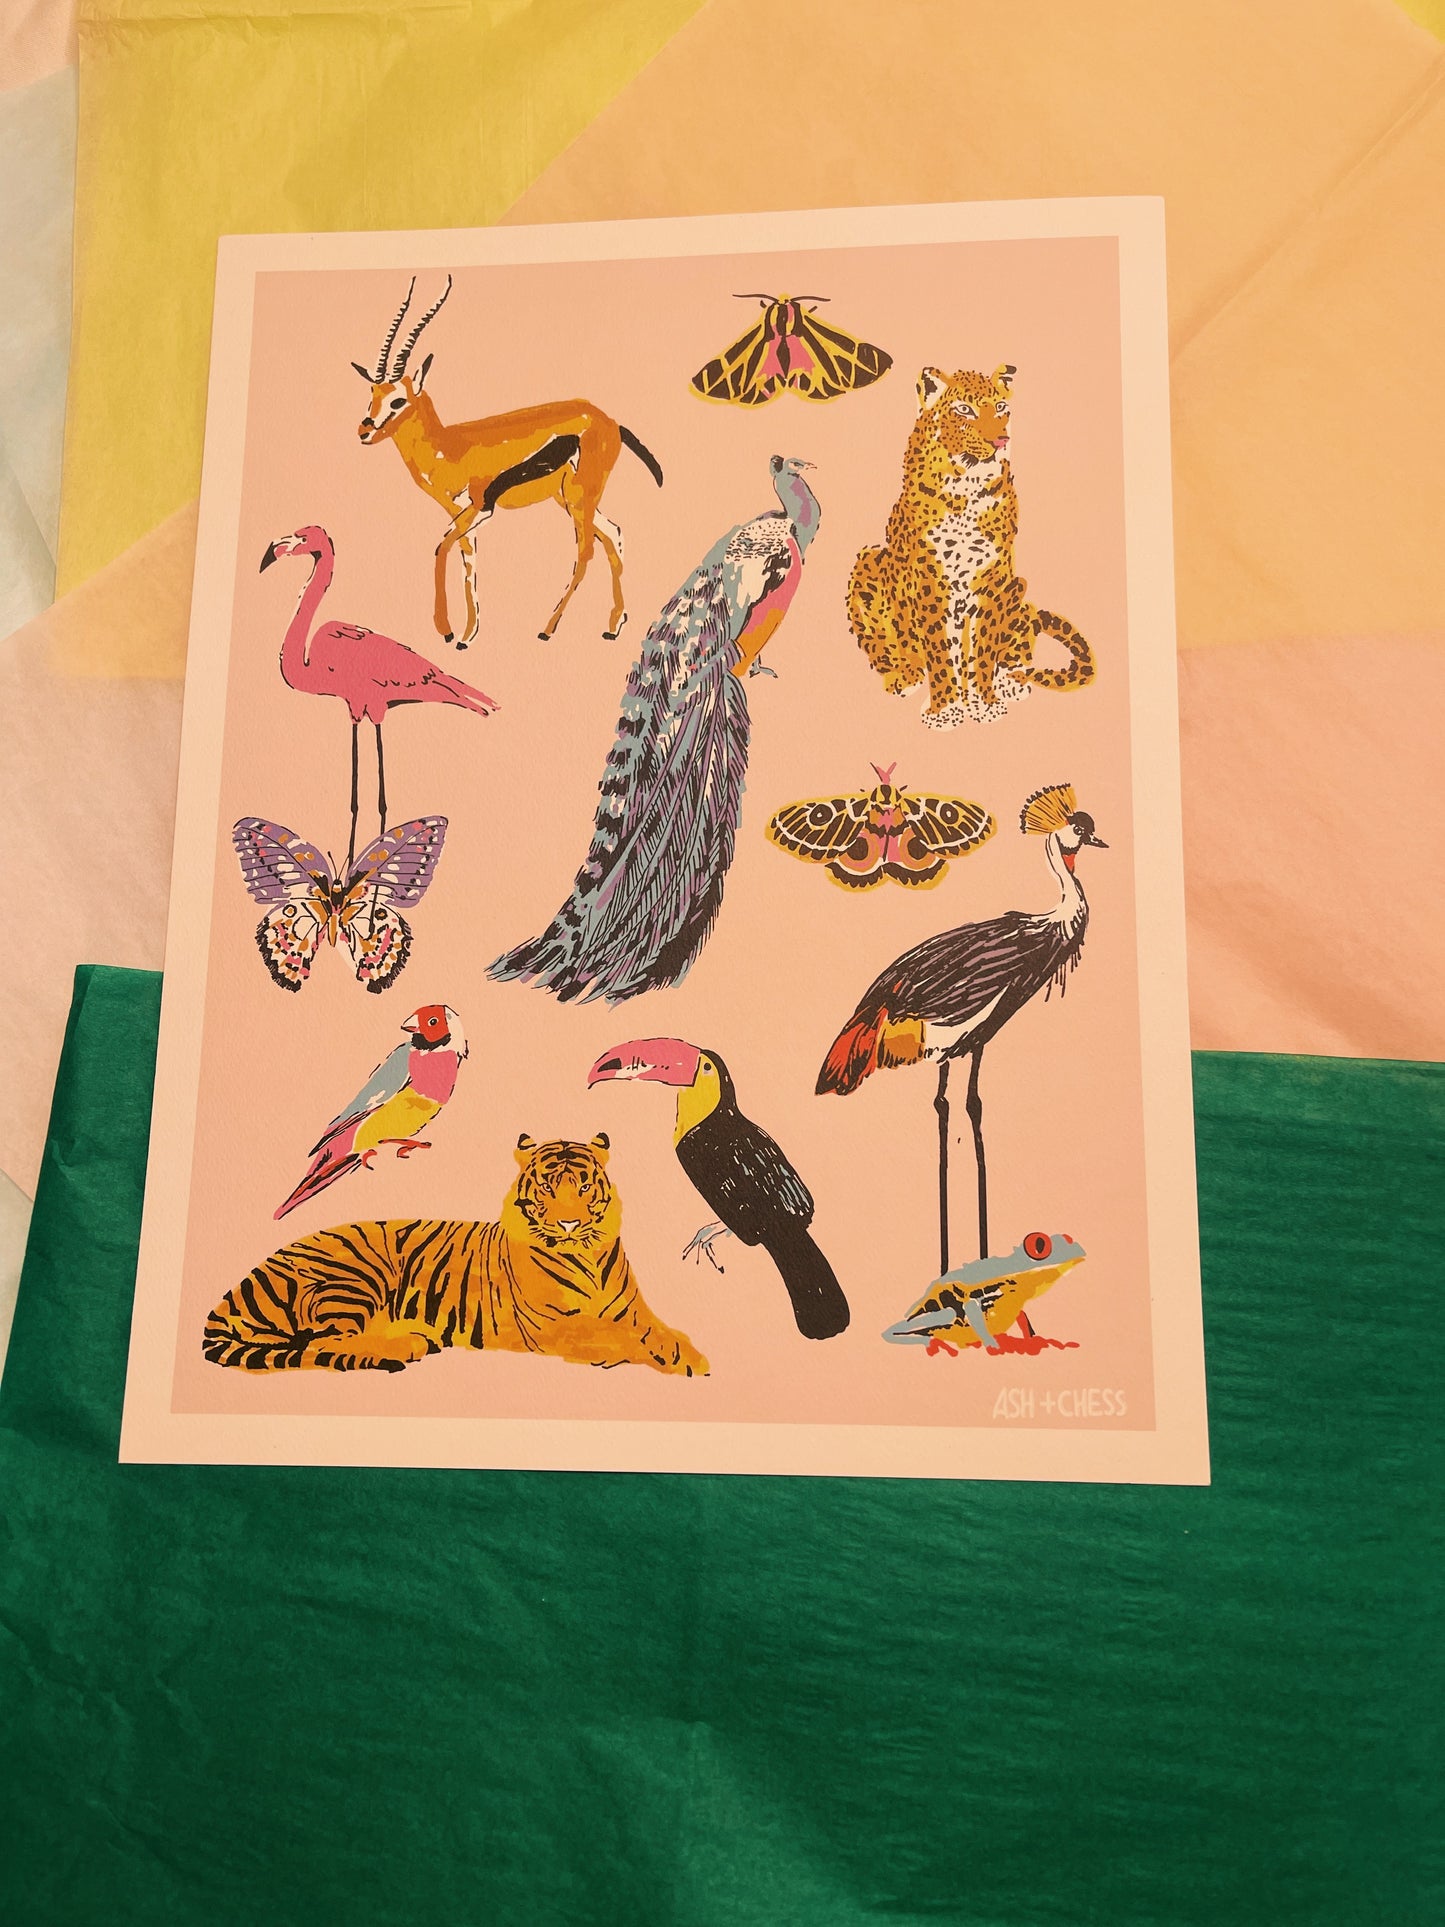 11 x 14 animal kaleidoscope art print